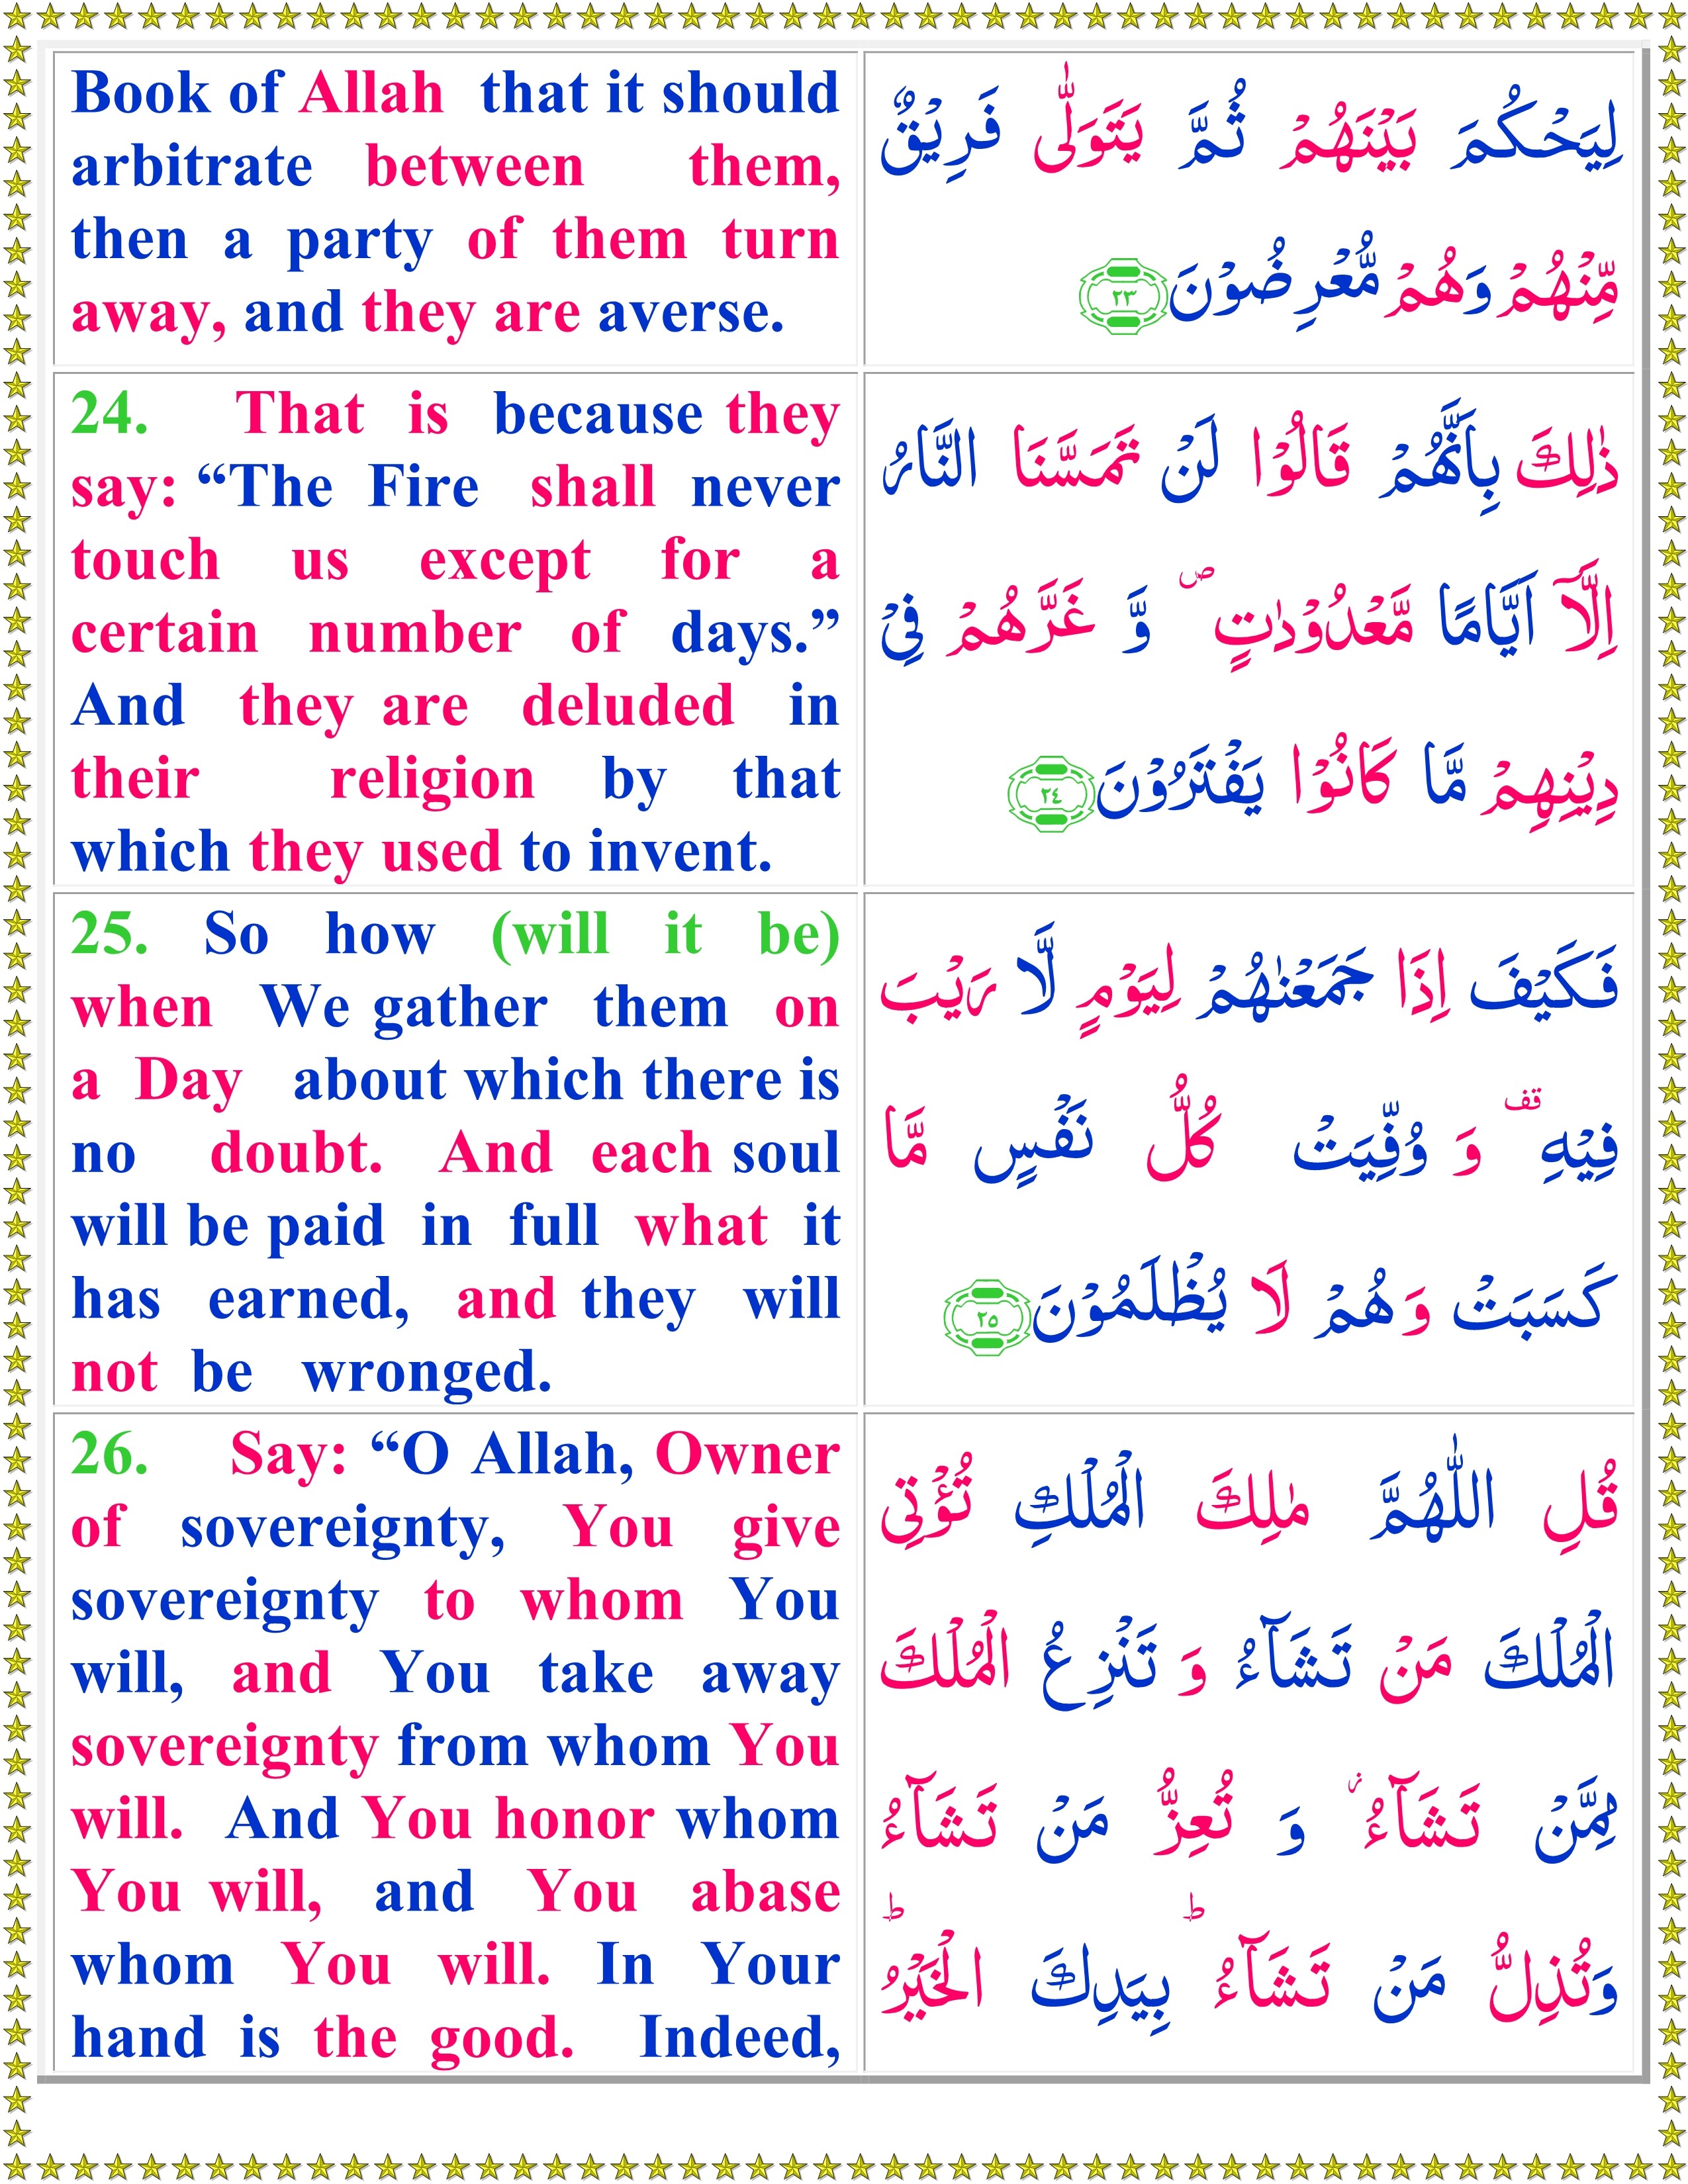 Read Surah Al Imran With English Translation - Quran o Sunnat